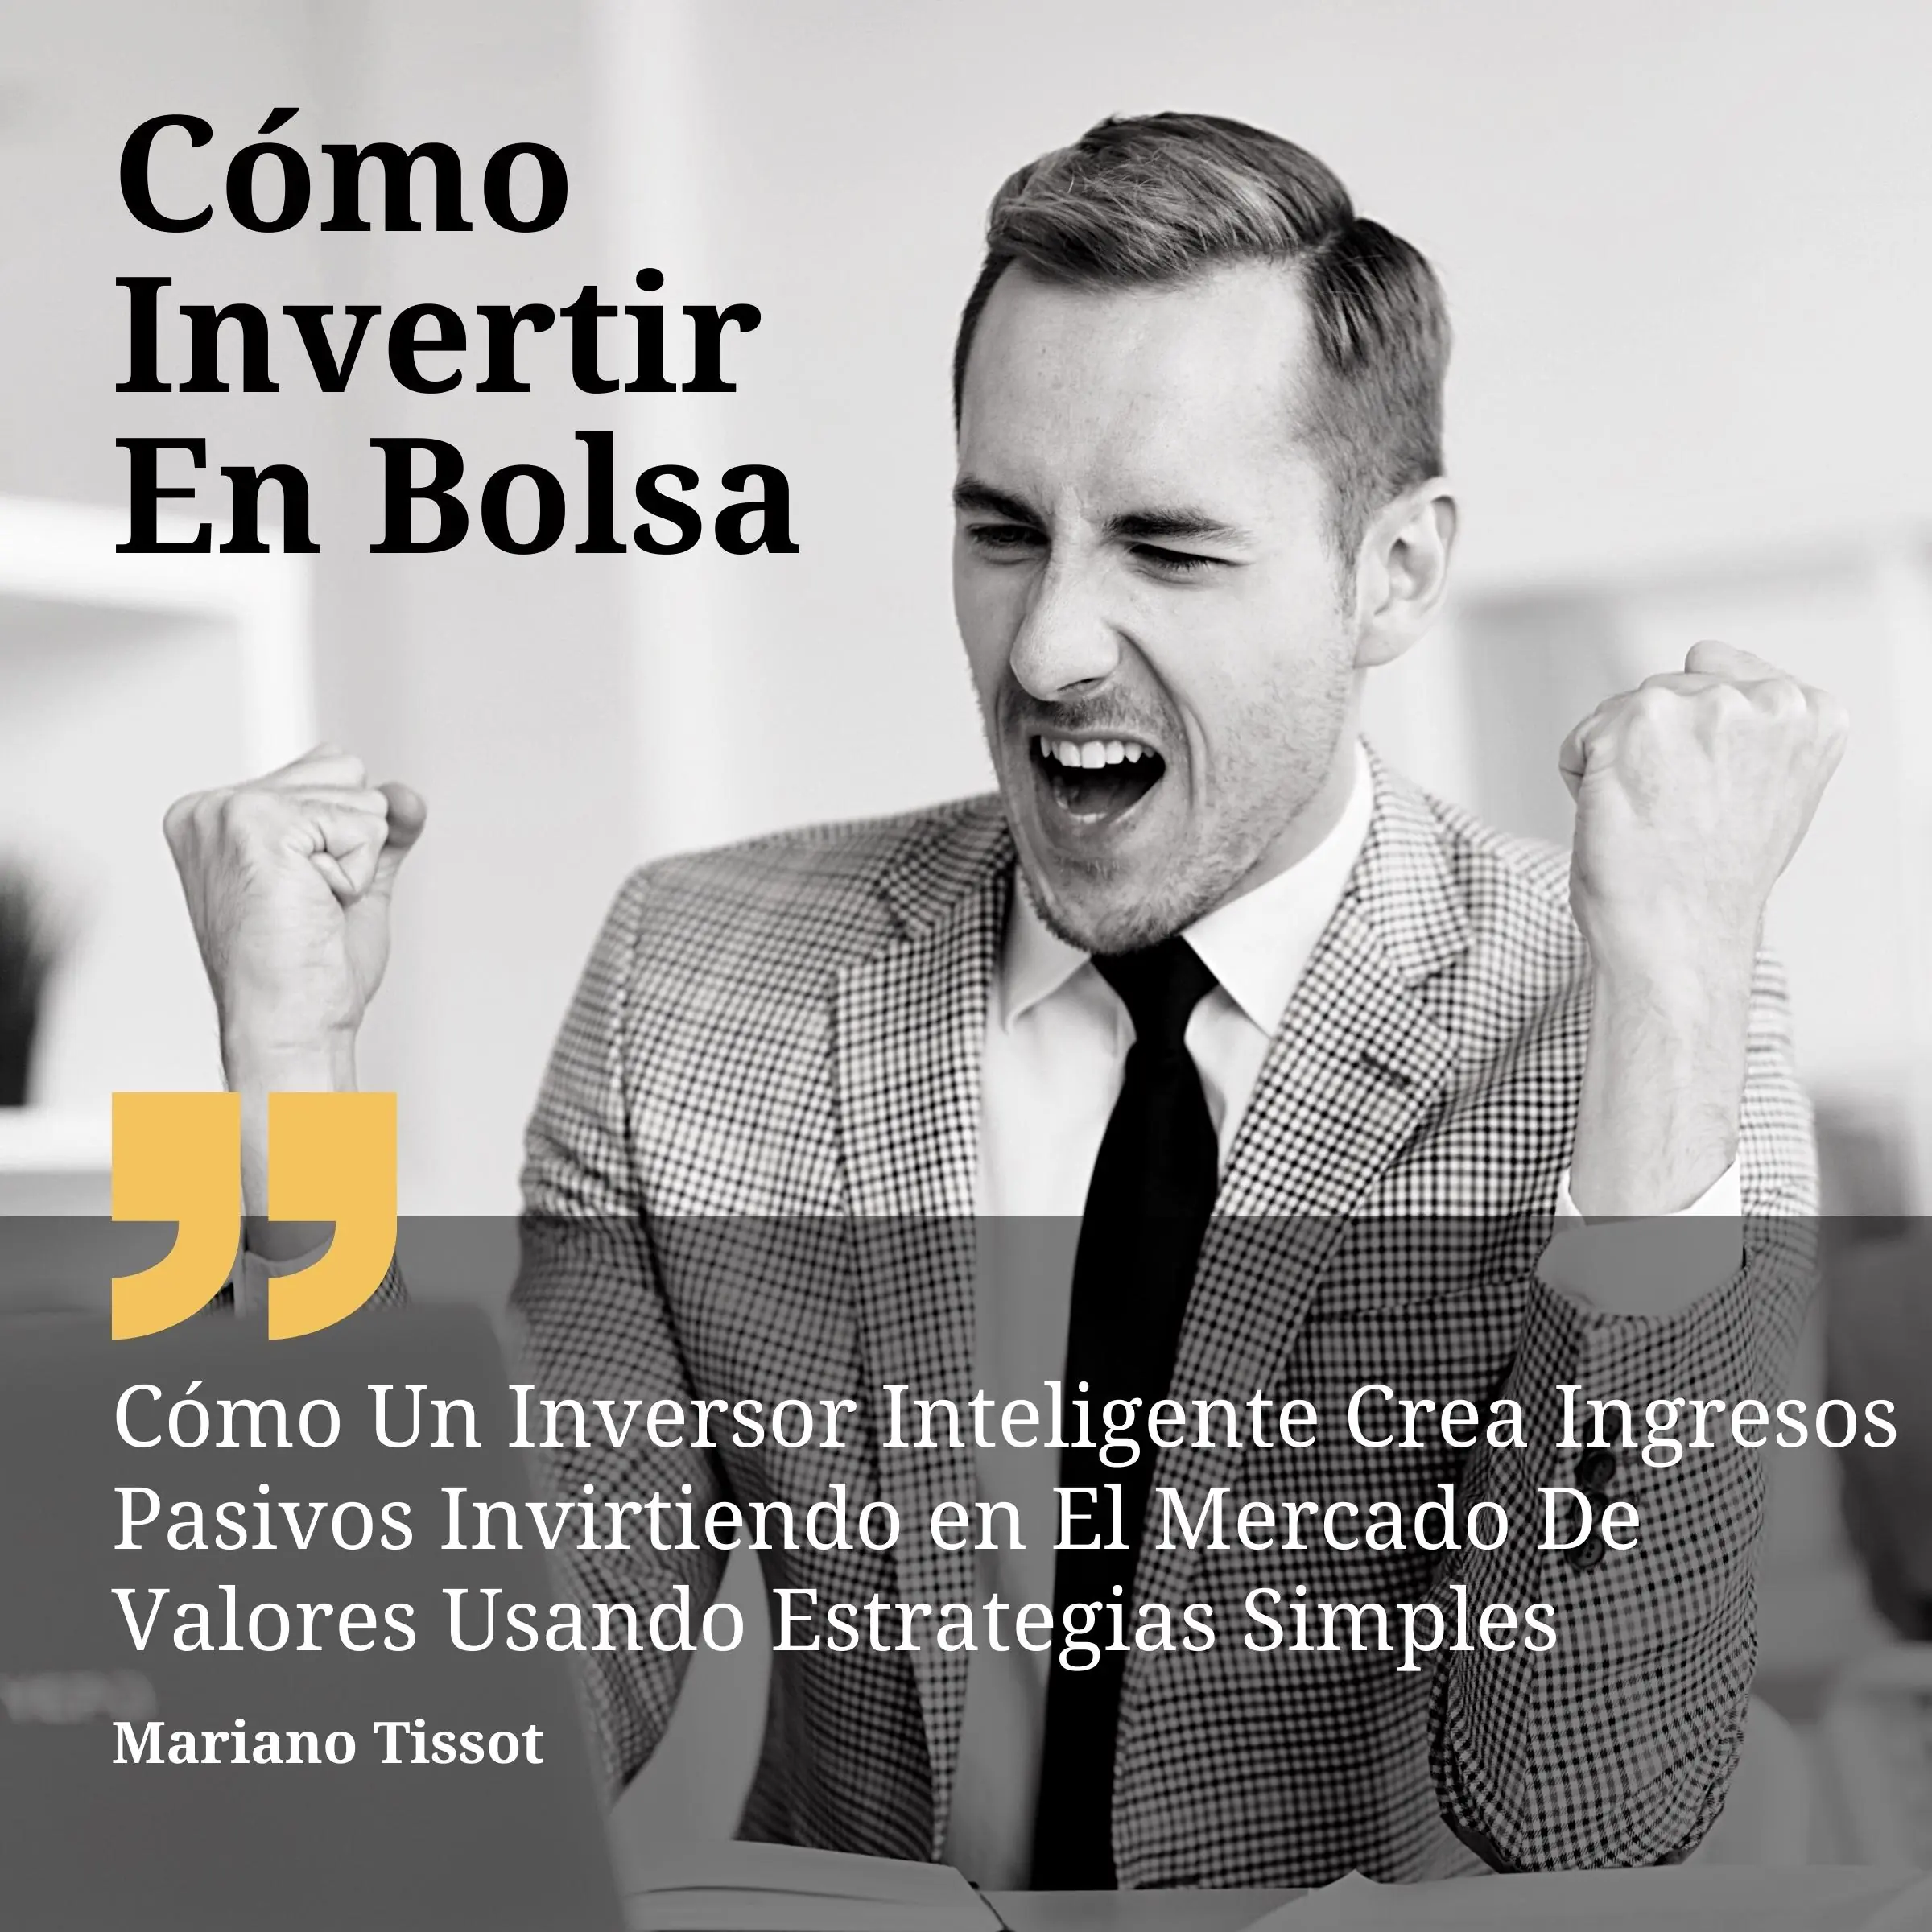 Cómo Invertir En Bolsa by Mariano Tissot Audiobook